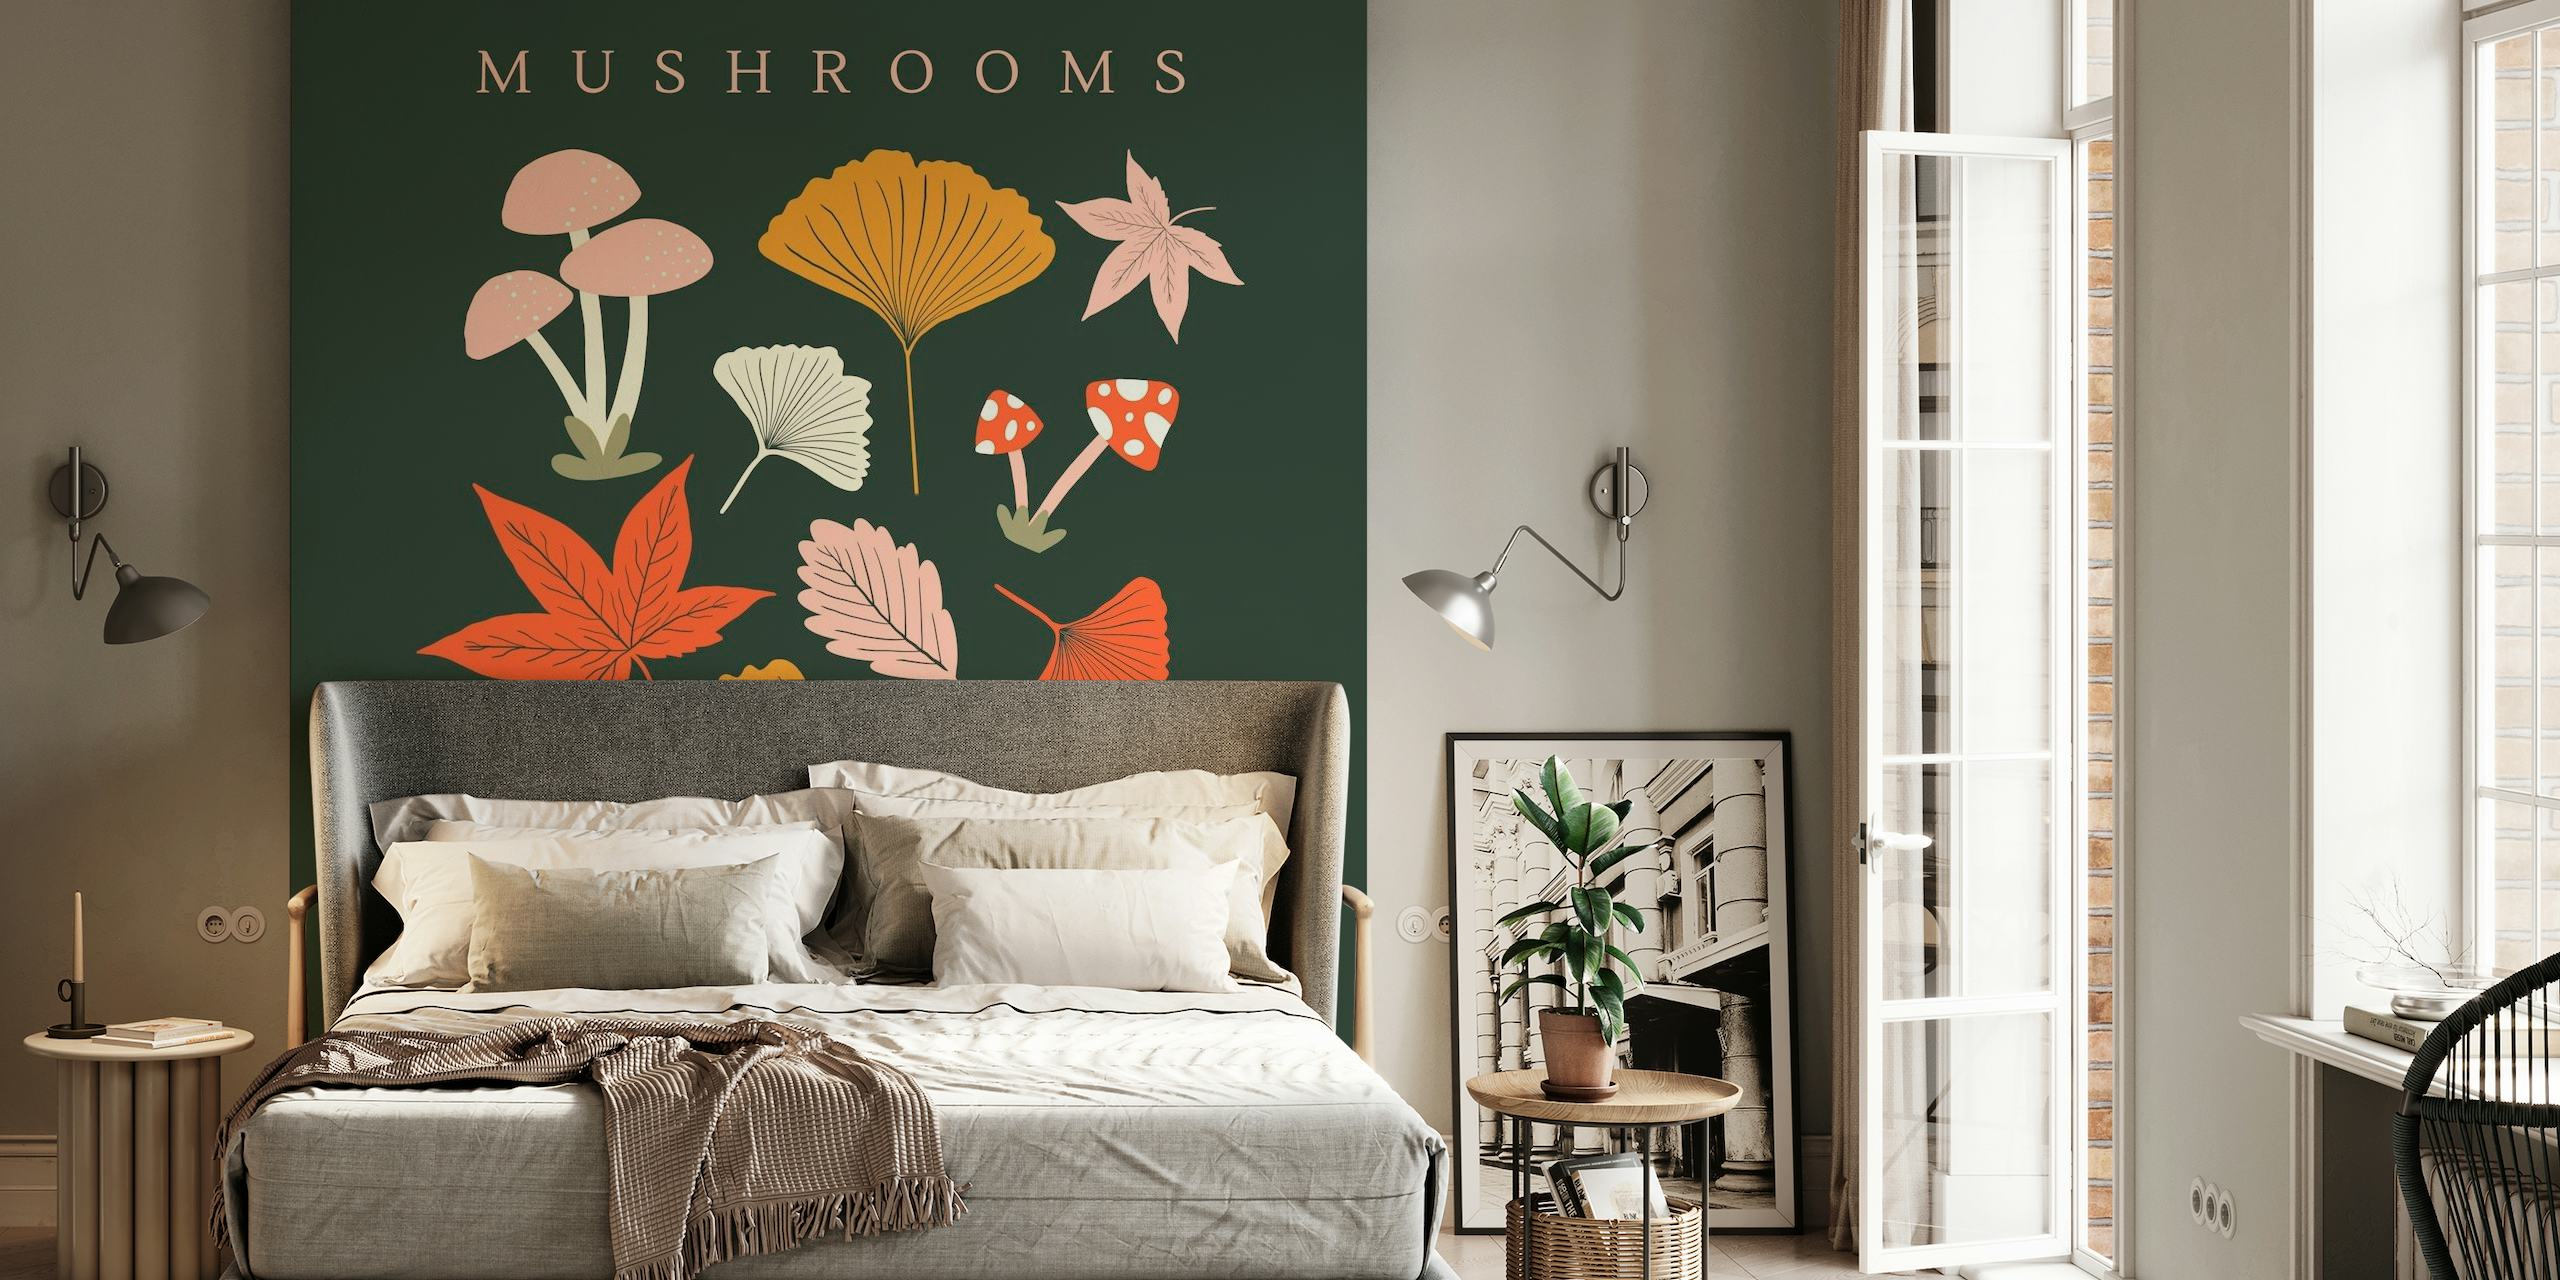 Mushrooms and Leaves wallpaper